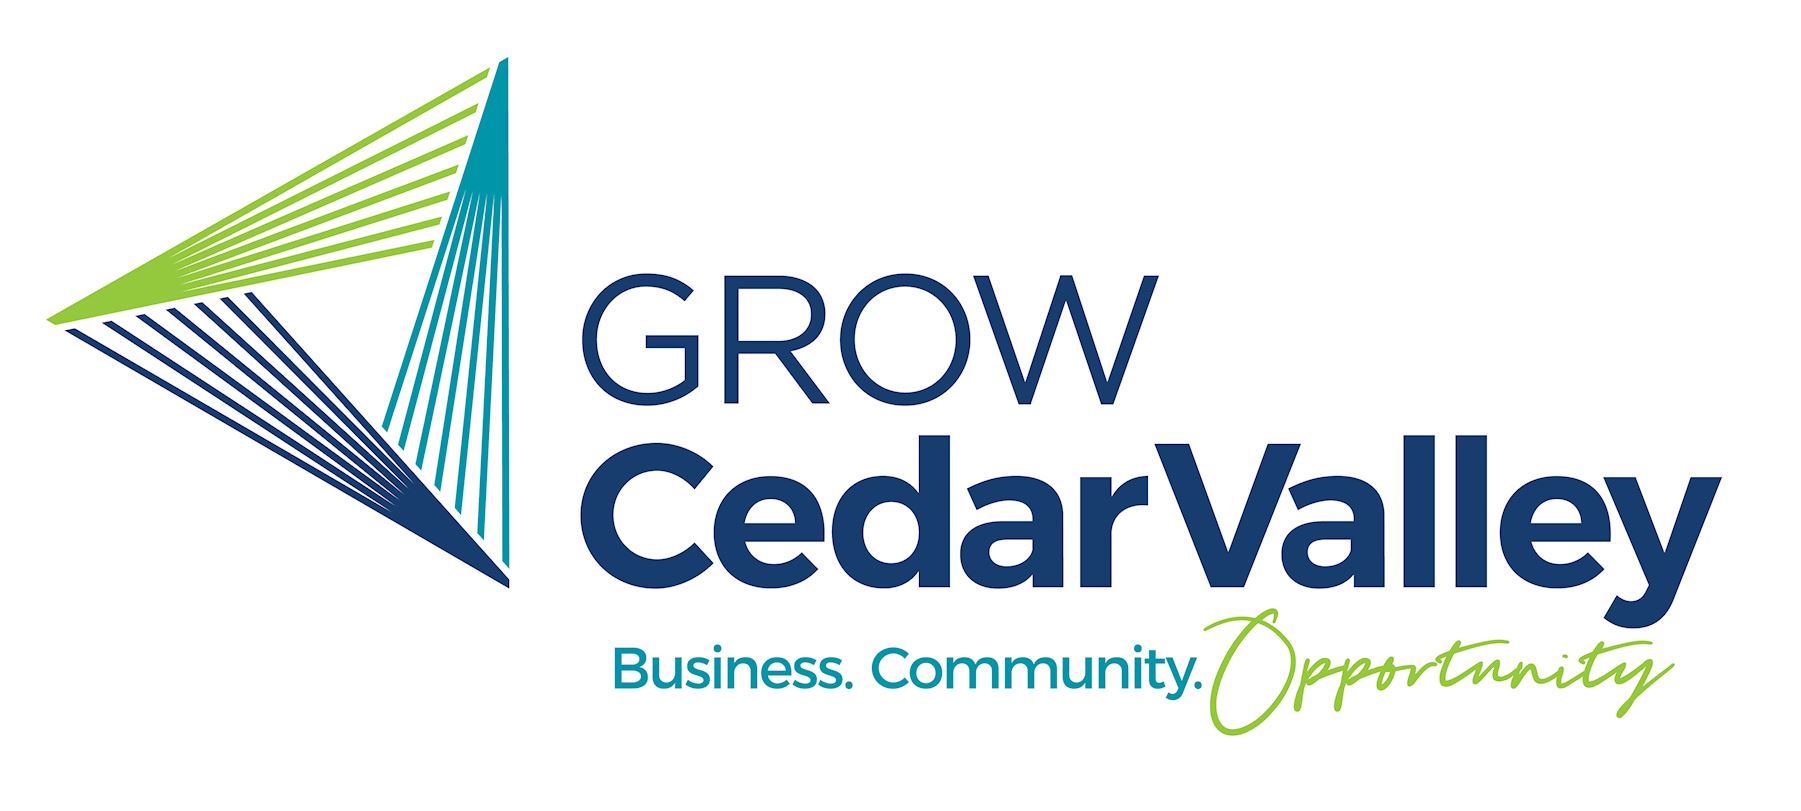 Cedar Valley Investors Support Grow Cedar Valley Through Voluntary Assessment